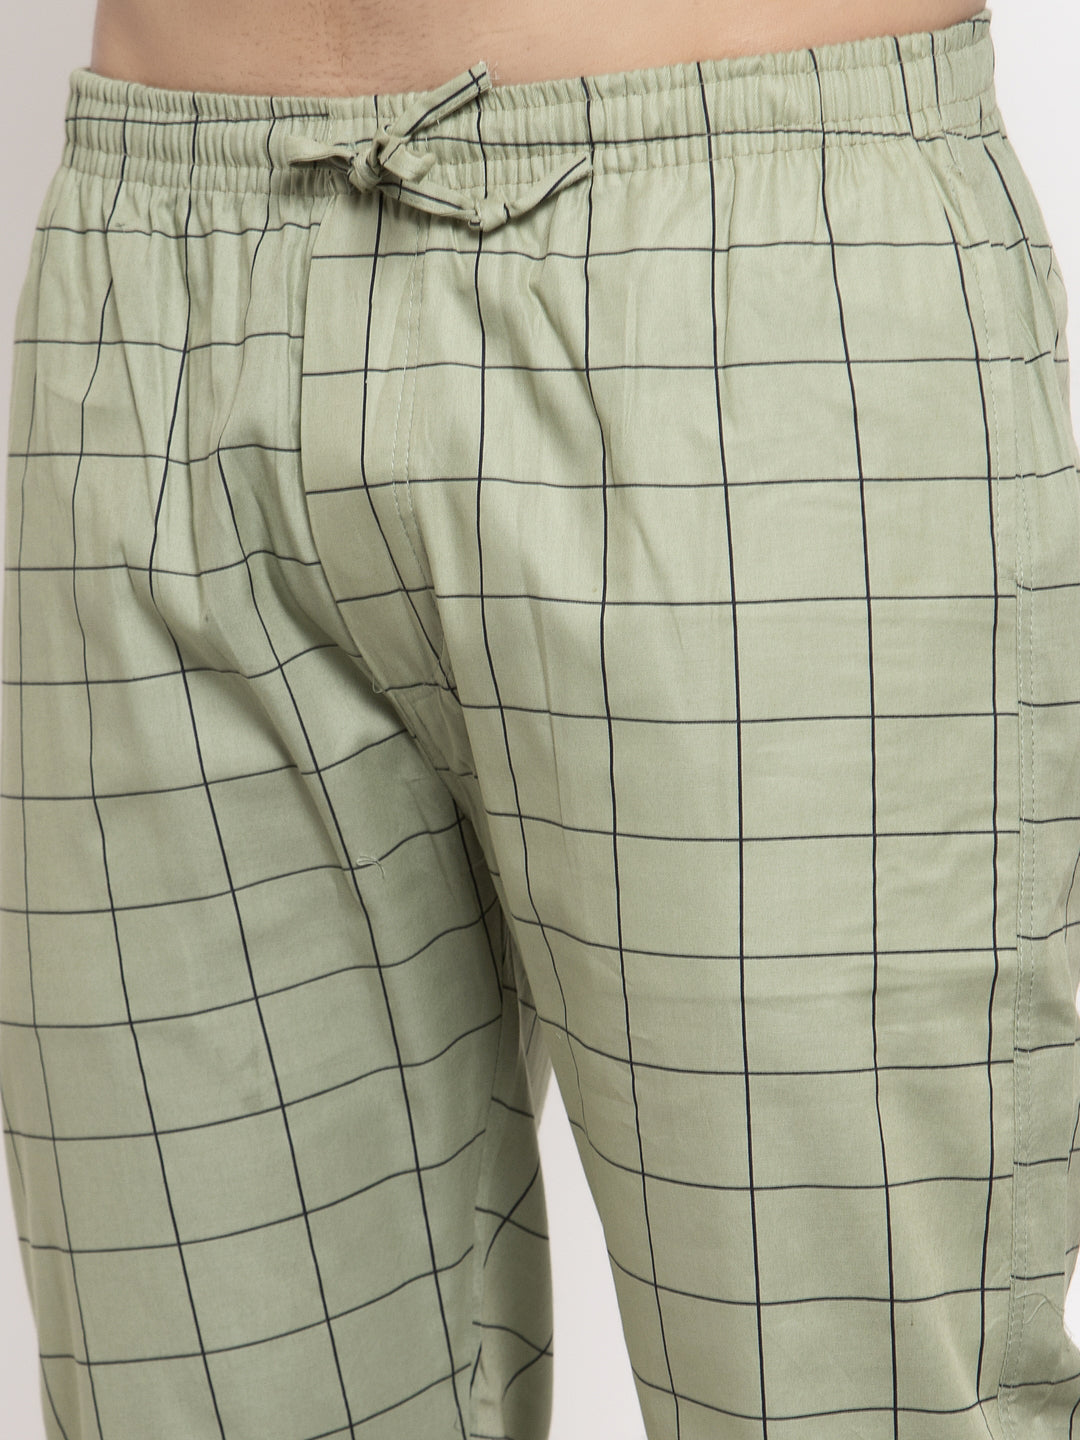 Men's Green Checked Cotton Track Pants ( JOG 012Pista ) - Jainish